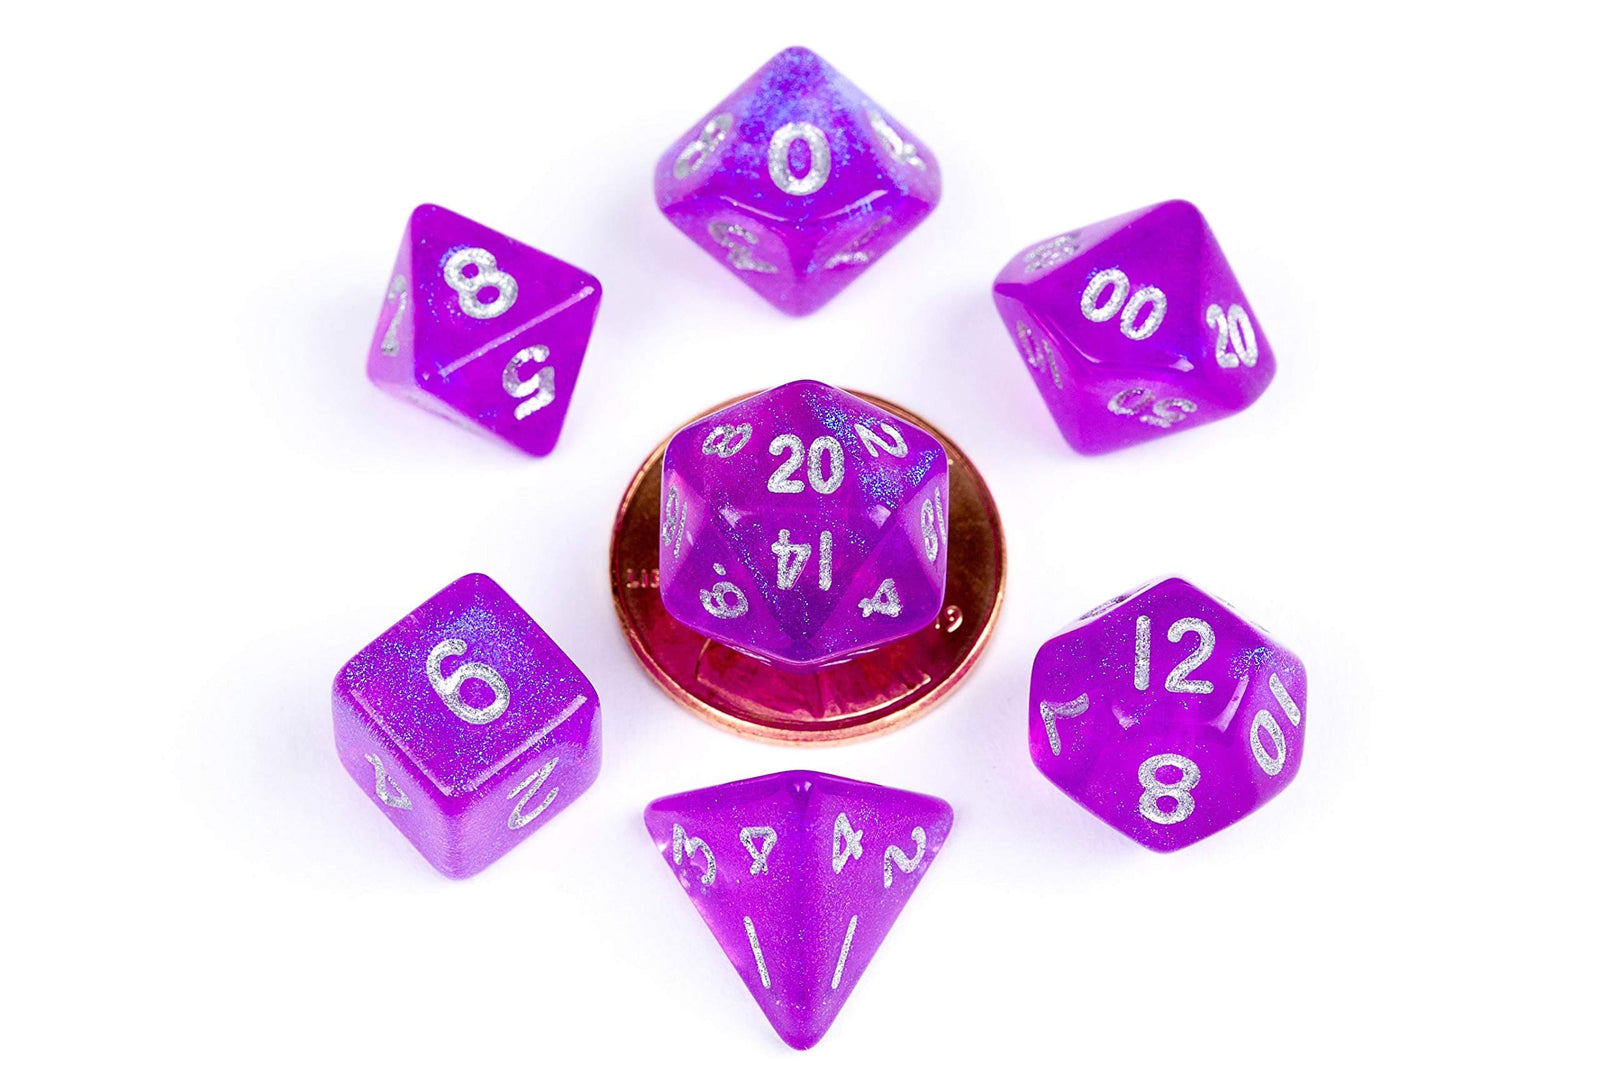 Fanroll By Metallic Dice Games Accessories 10mm Mini Stardust Acrylic Poly Dice Set: Purple (7)